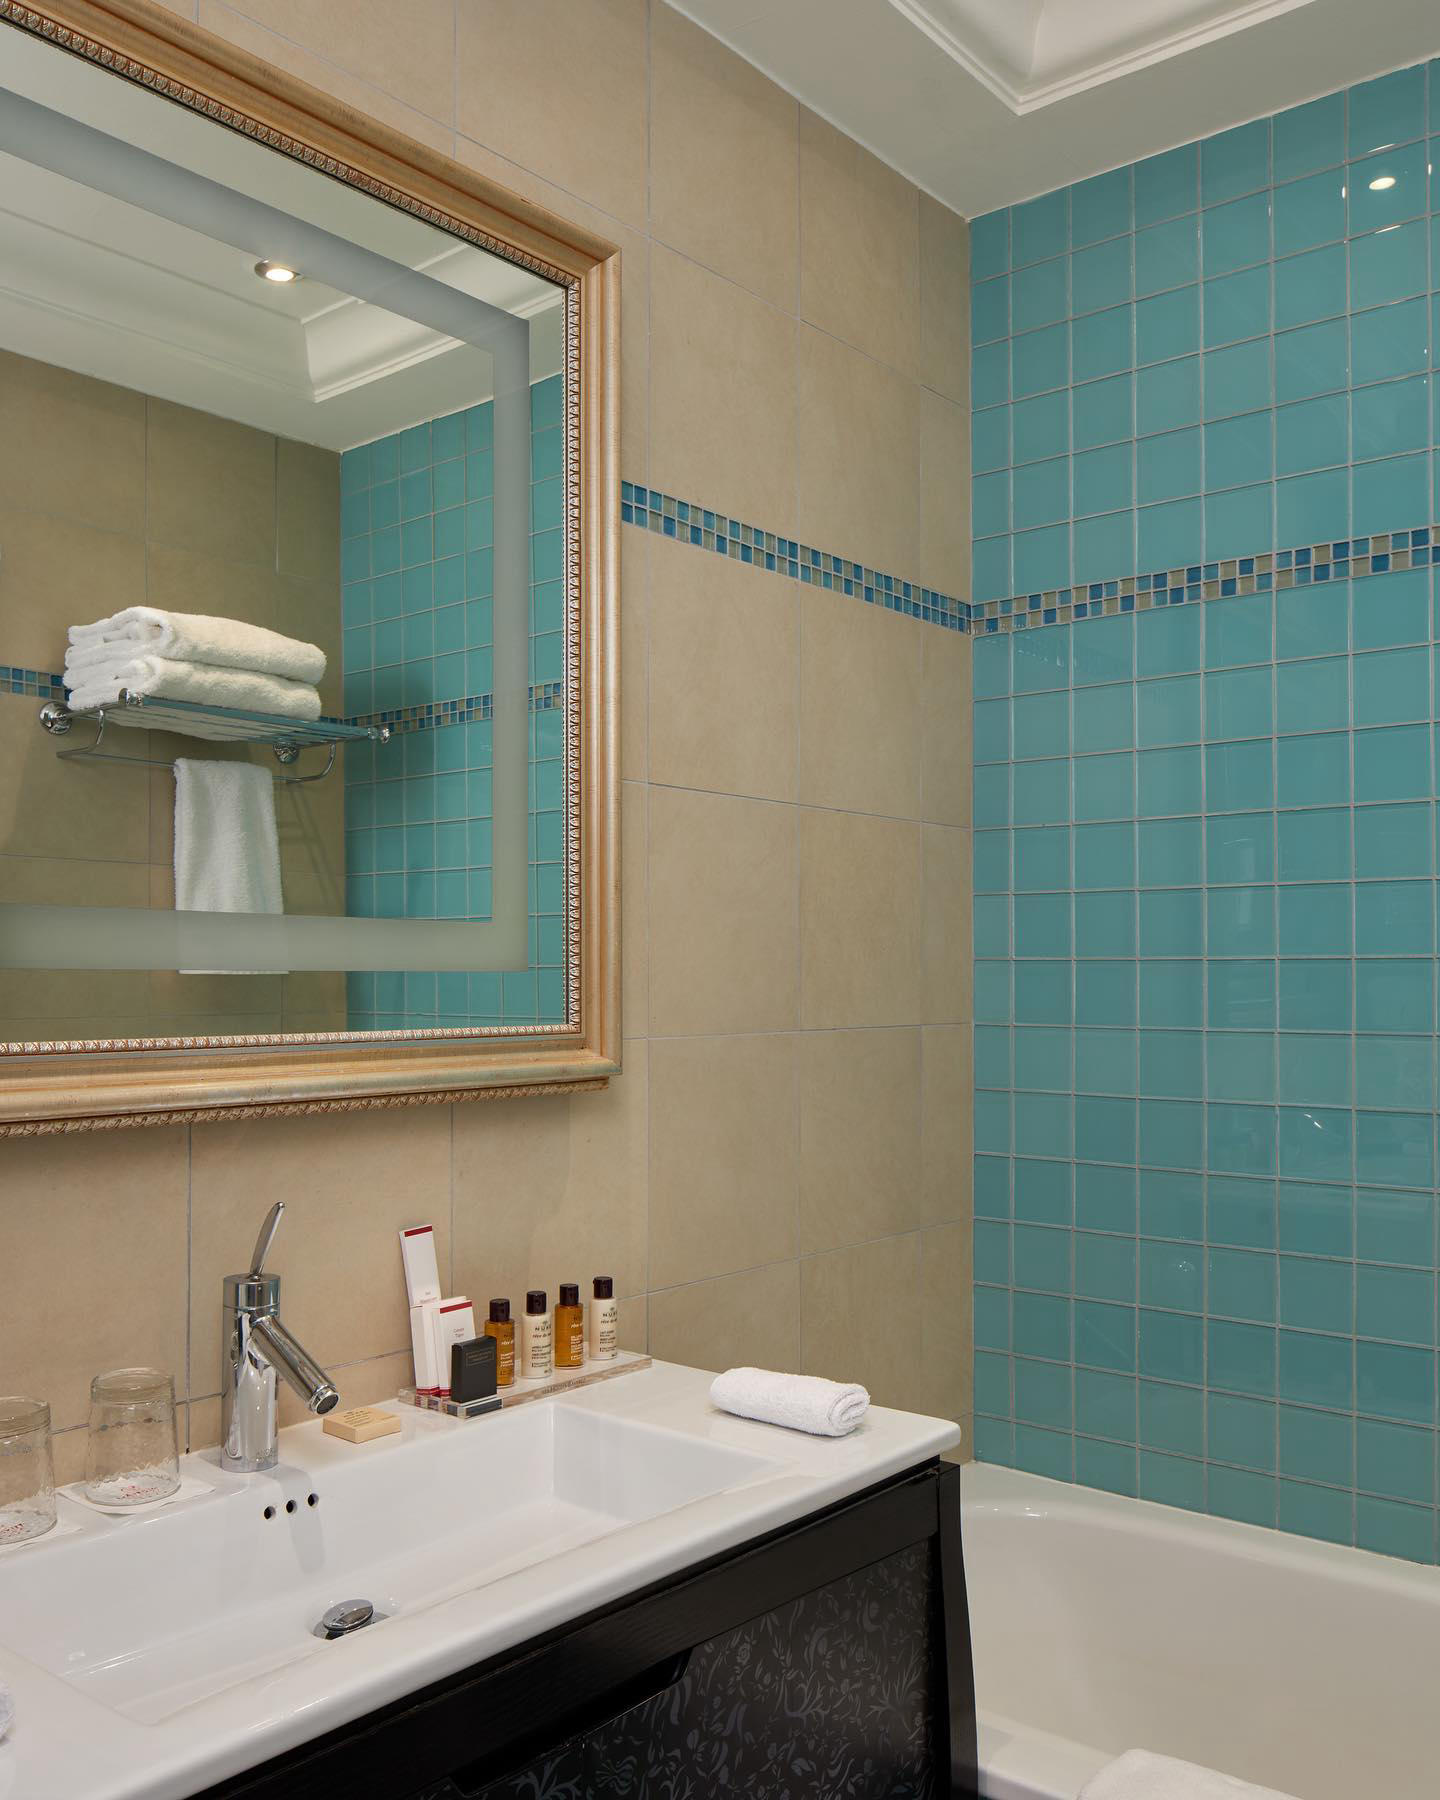 Majestic Hôtel-Spa Paris - [Bathroom] – Overview of the bathroom in room 207•[Salle de bain] - Aperç